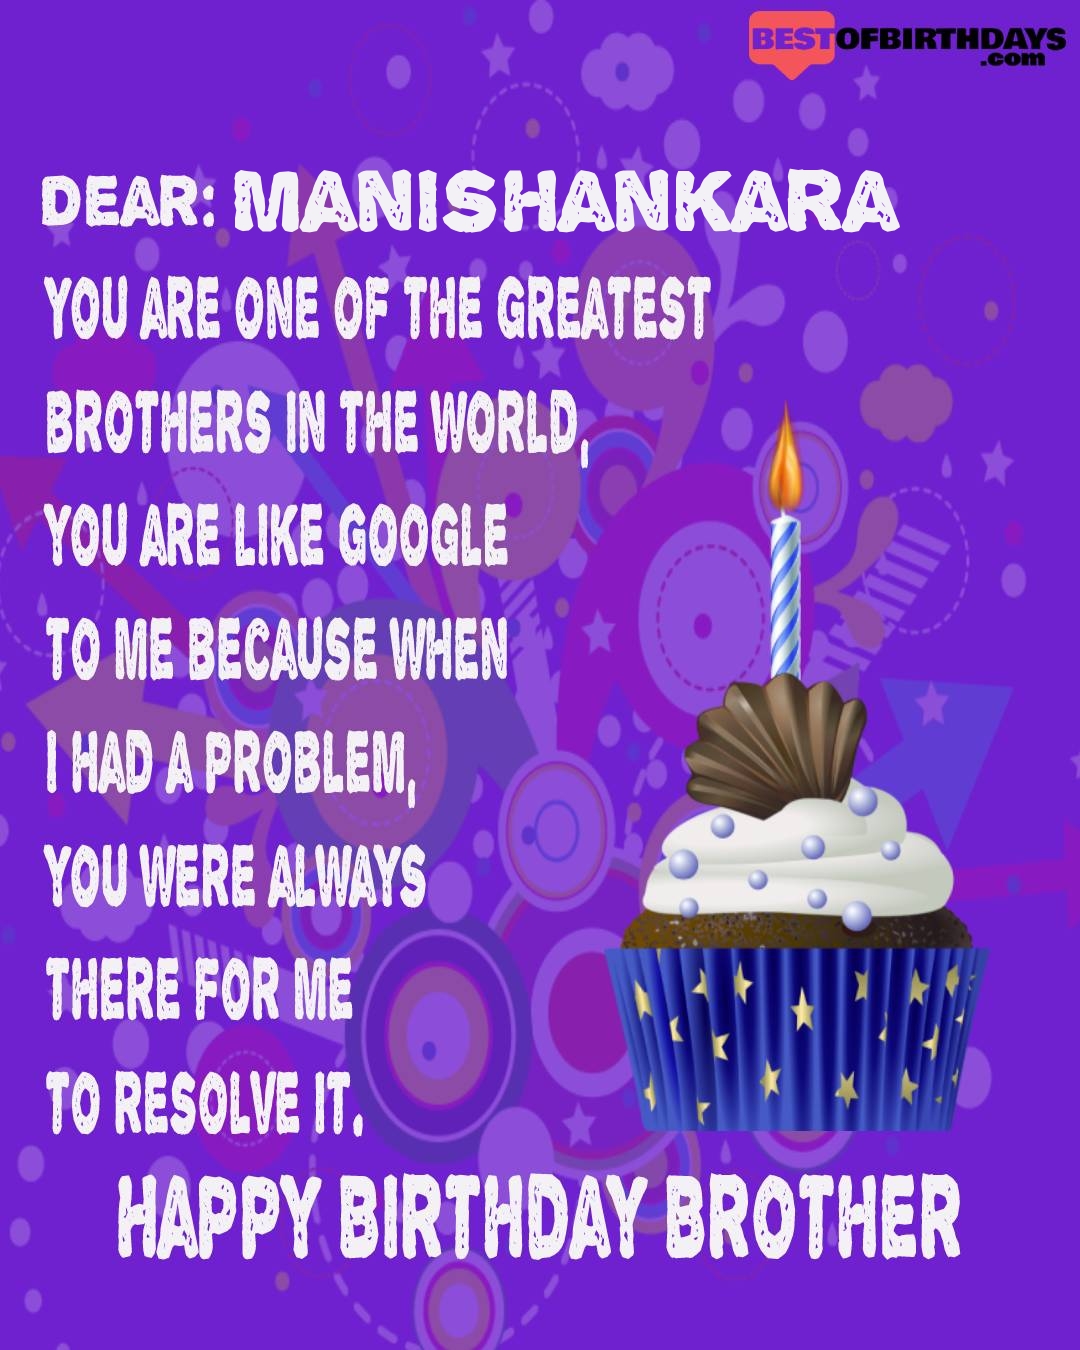 Happy birthday manishankara bhai brother bro